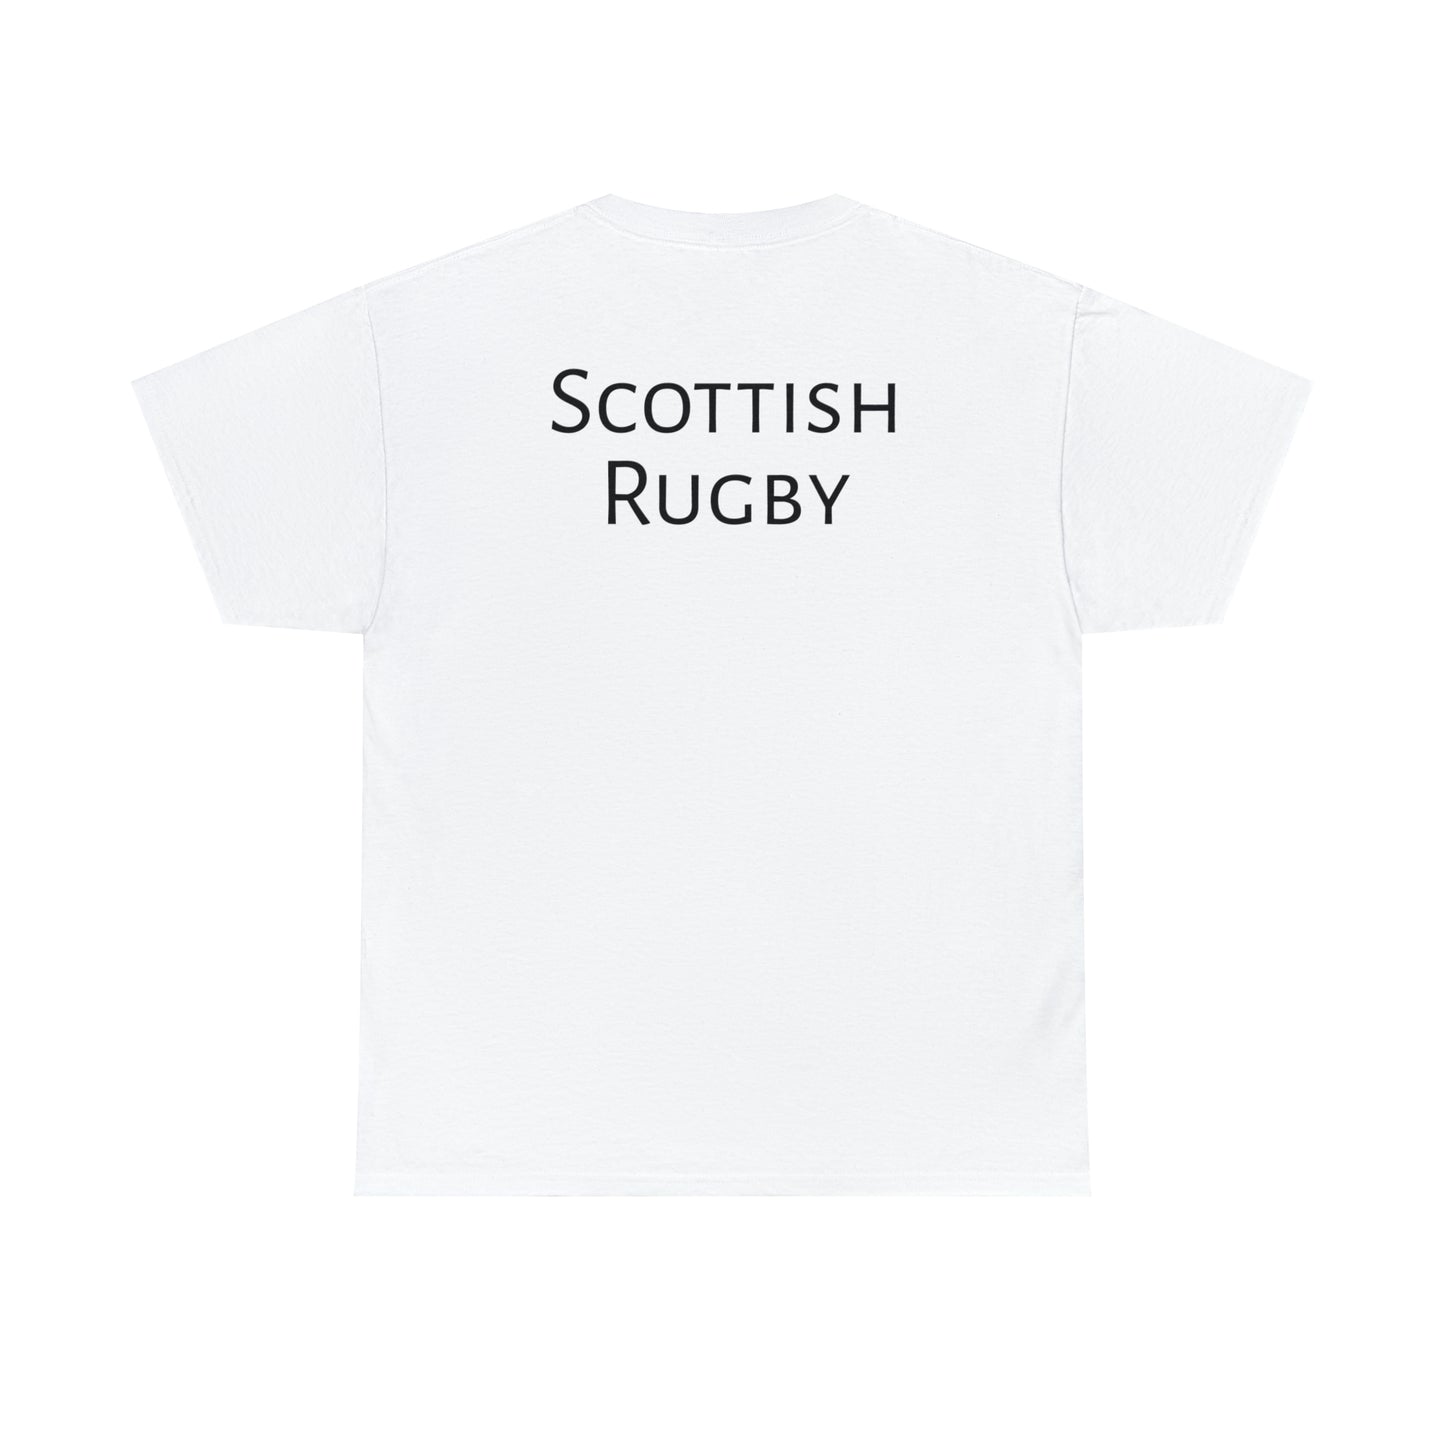 Ready Scotland - light shirts